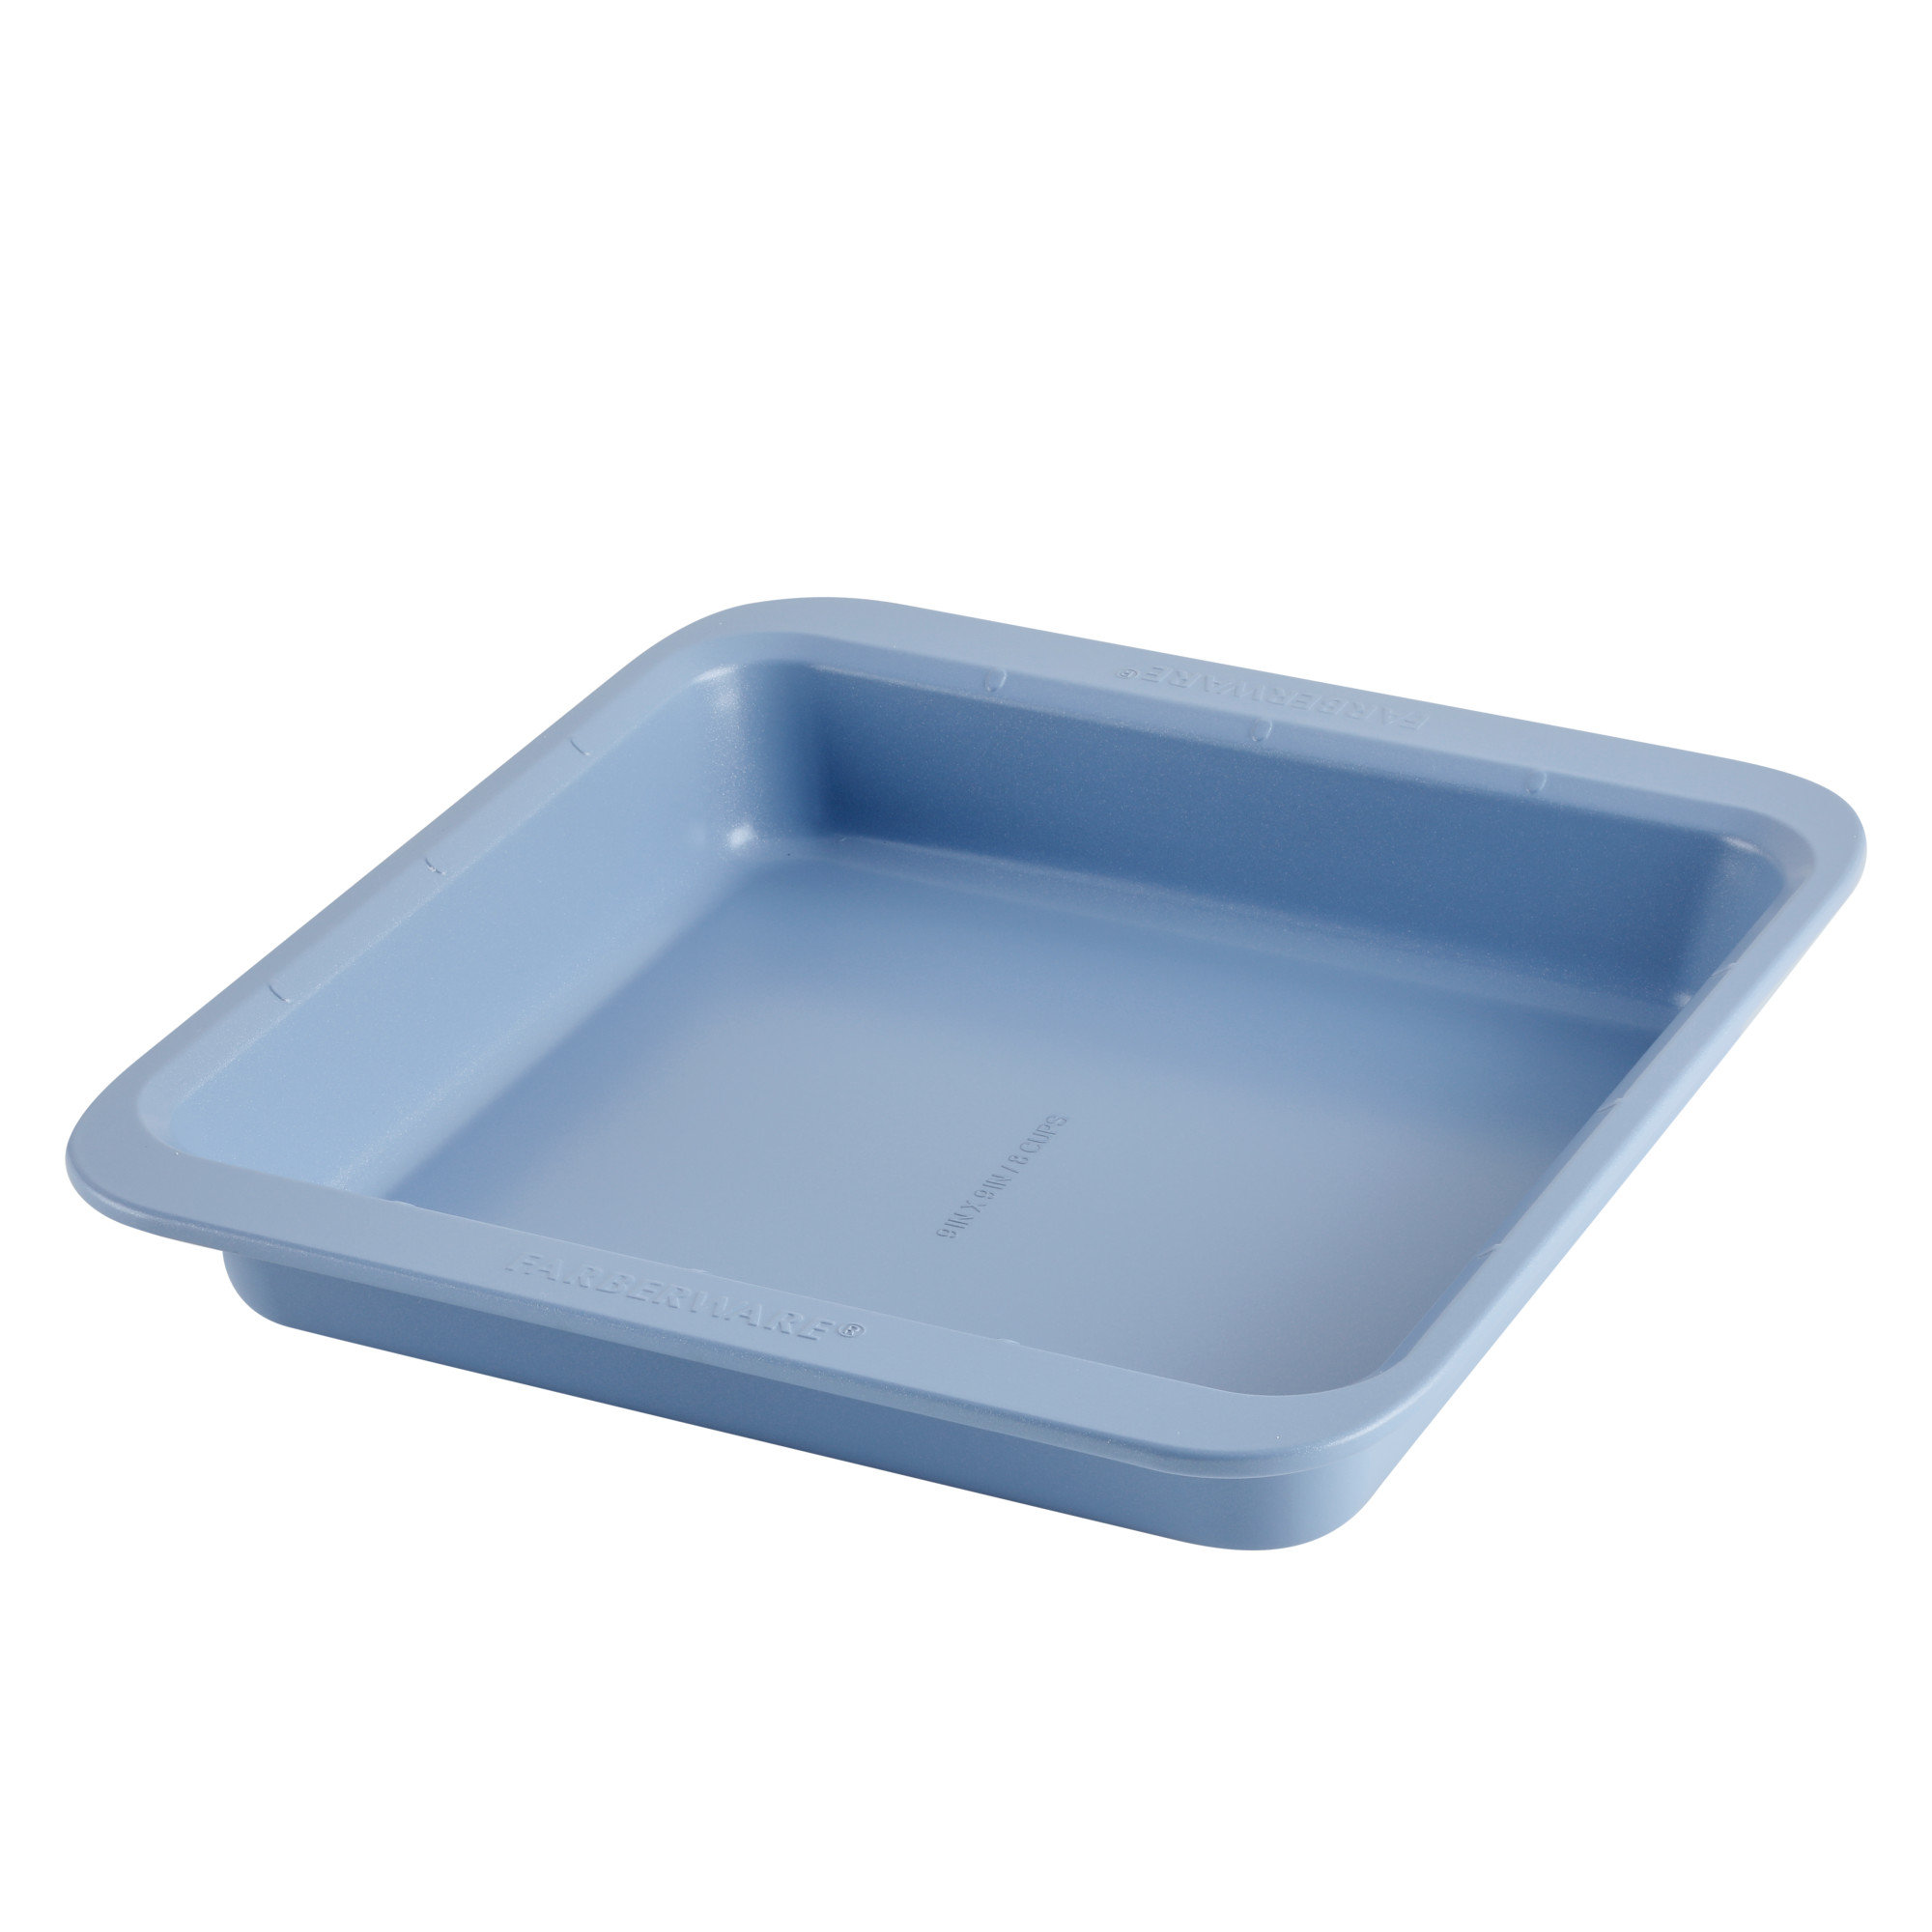 Farberware Easy Solutions Nonstick Bakeware Square Cake Pan, 9 Inch, Blue